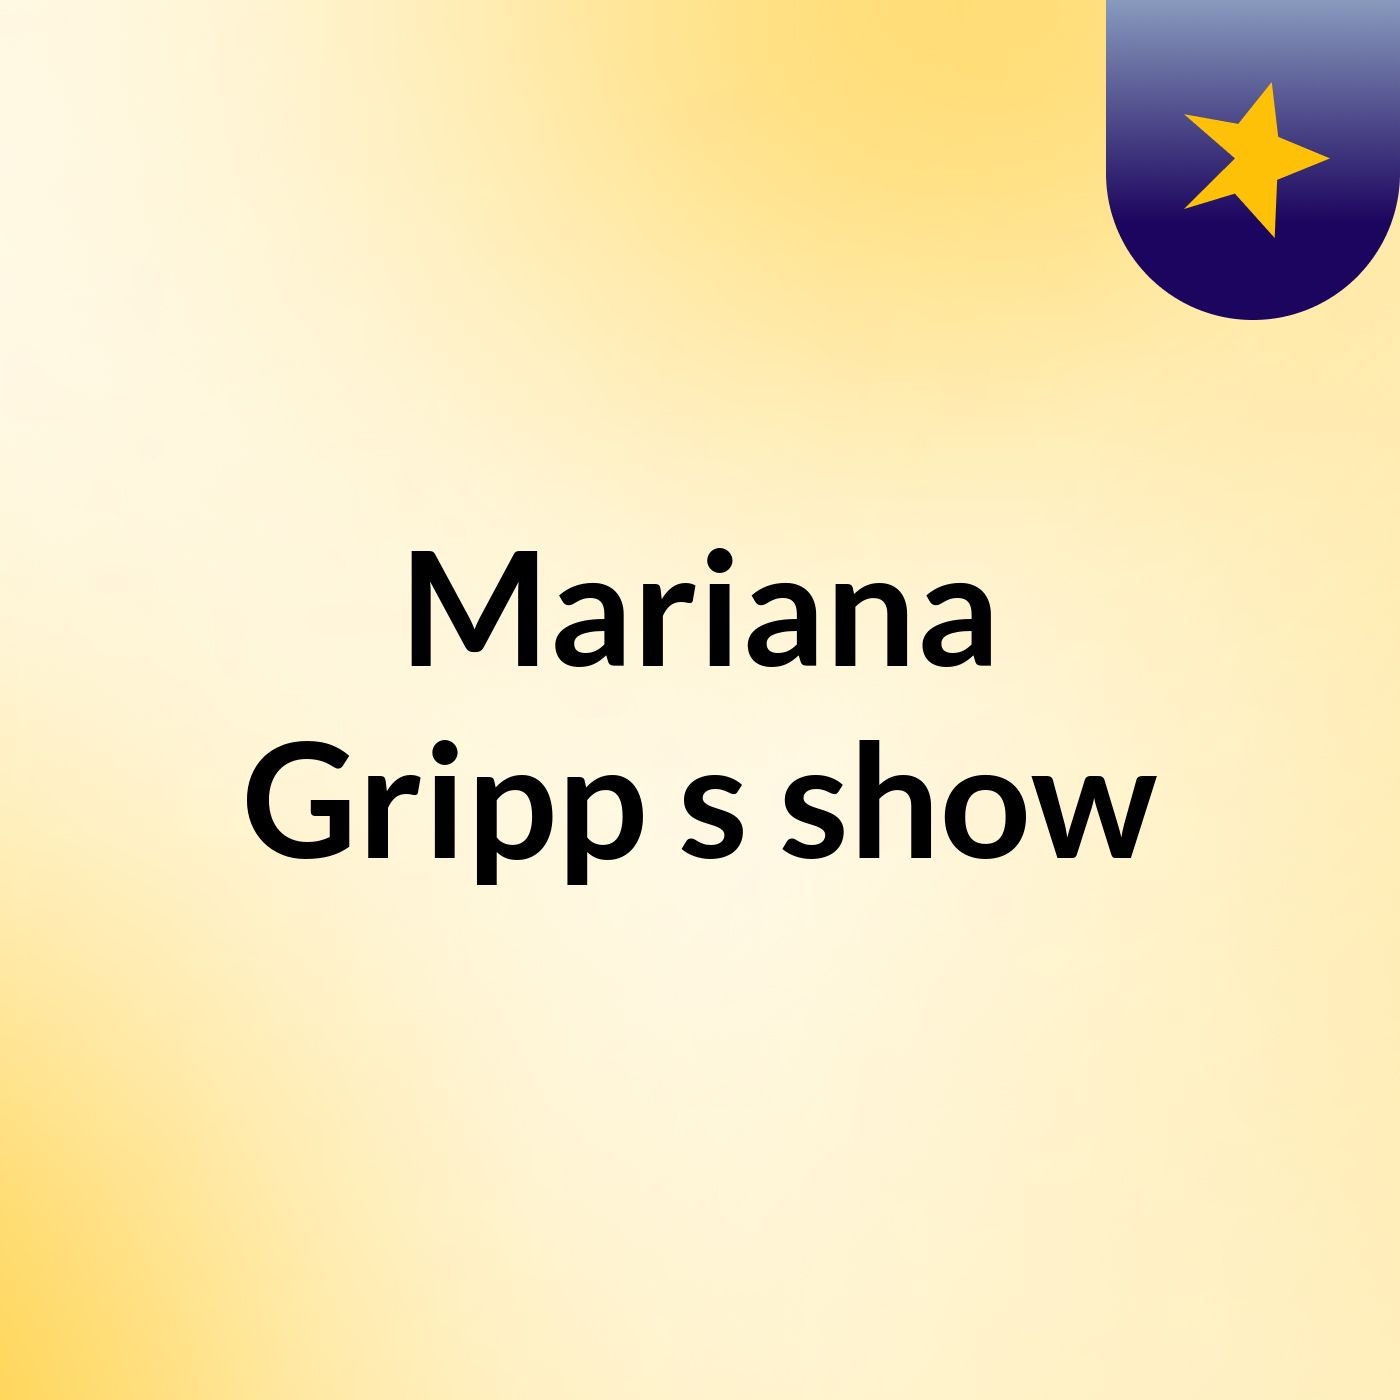 Mariana Gripp's show